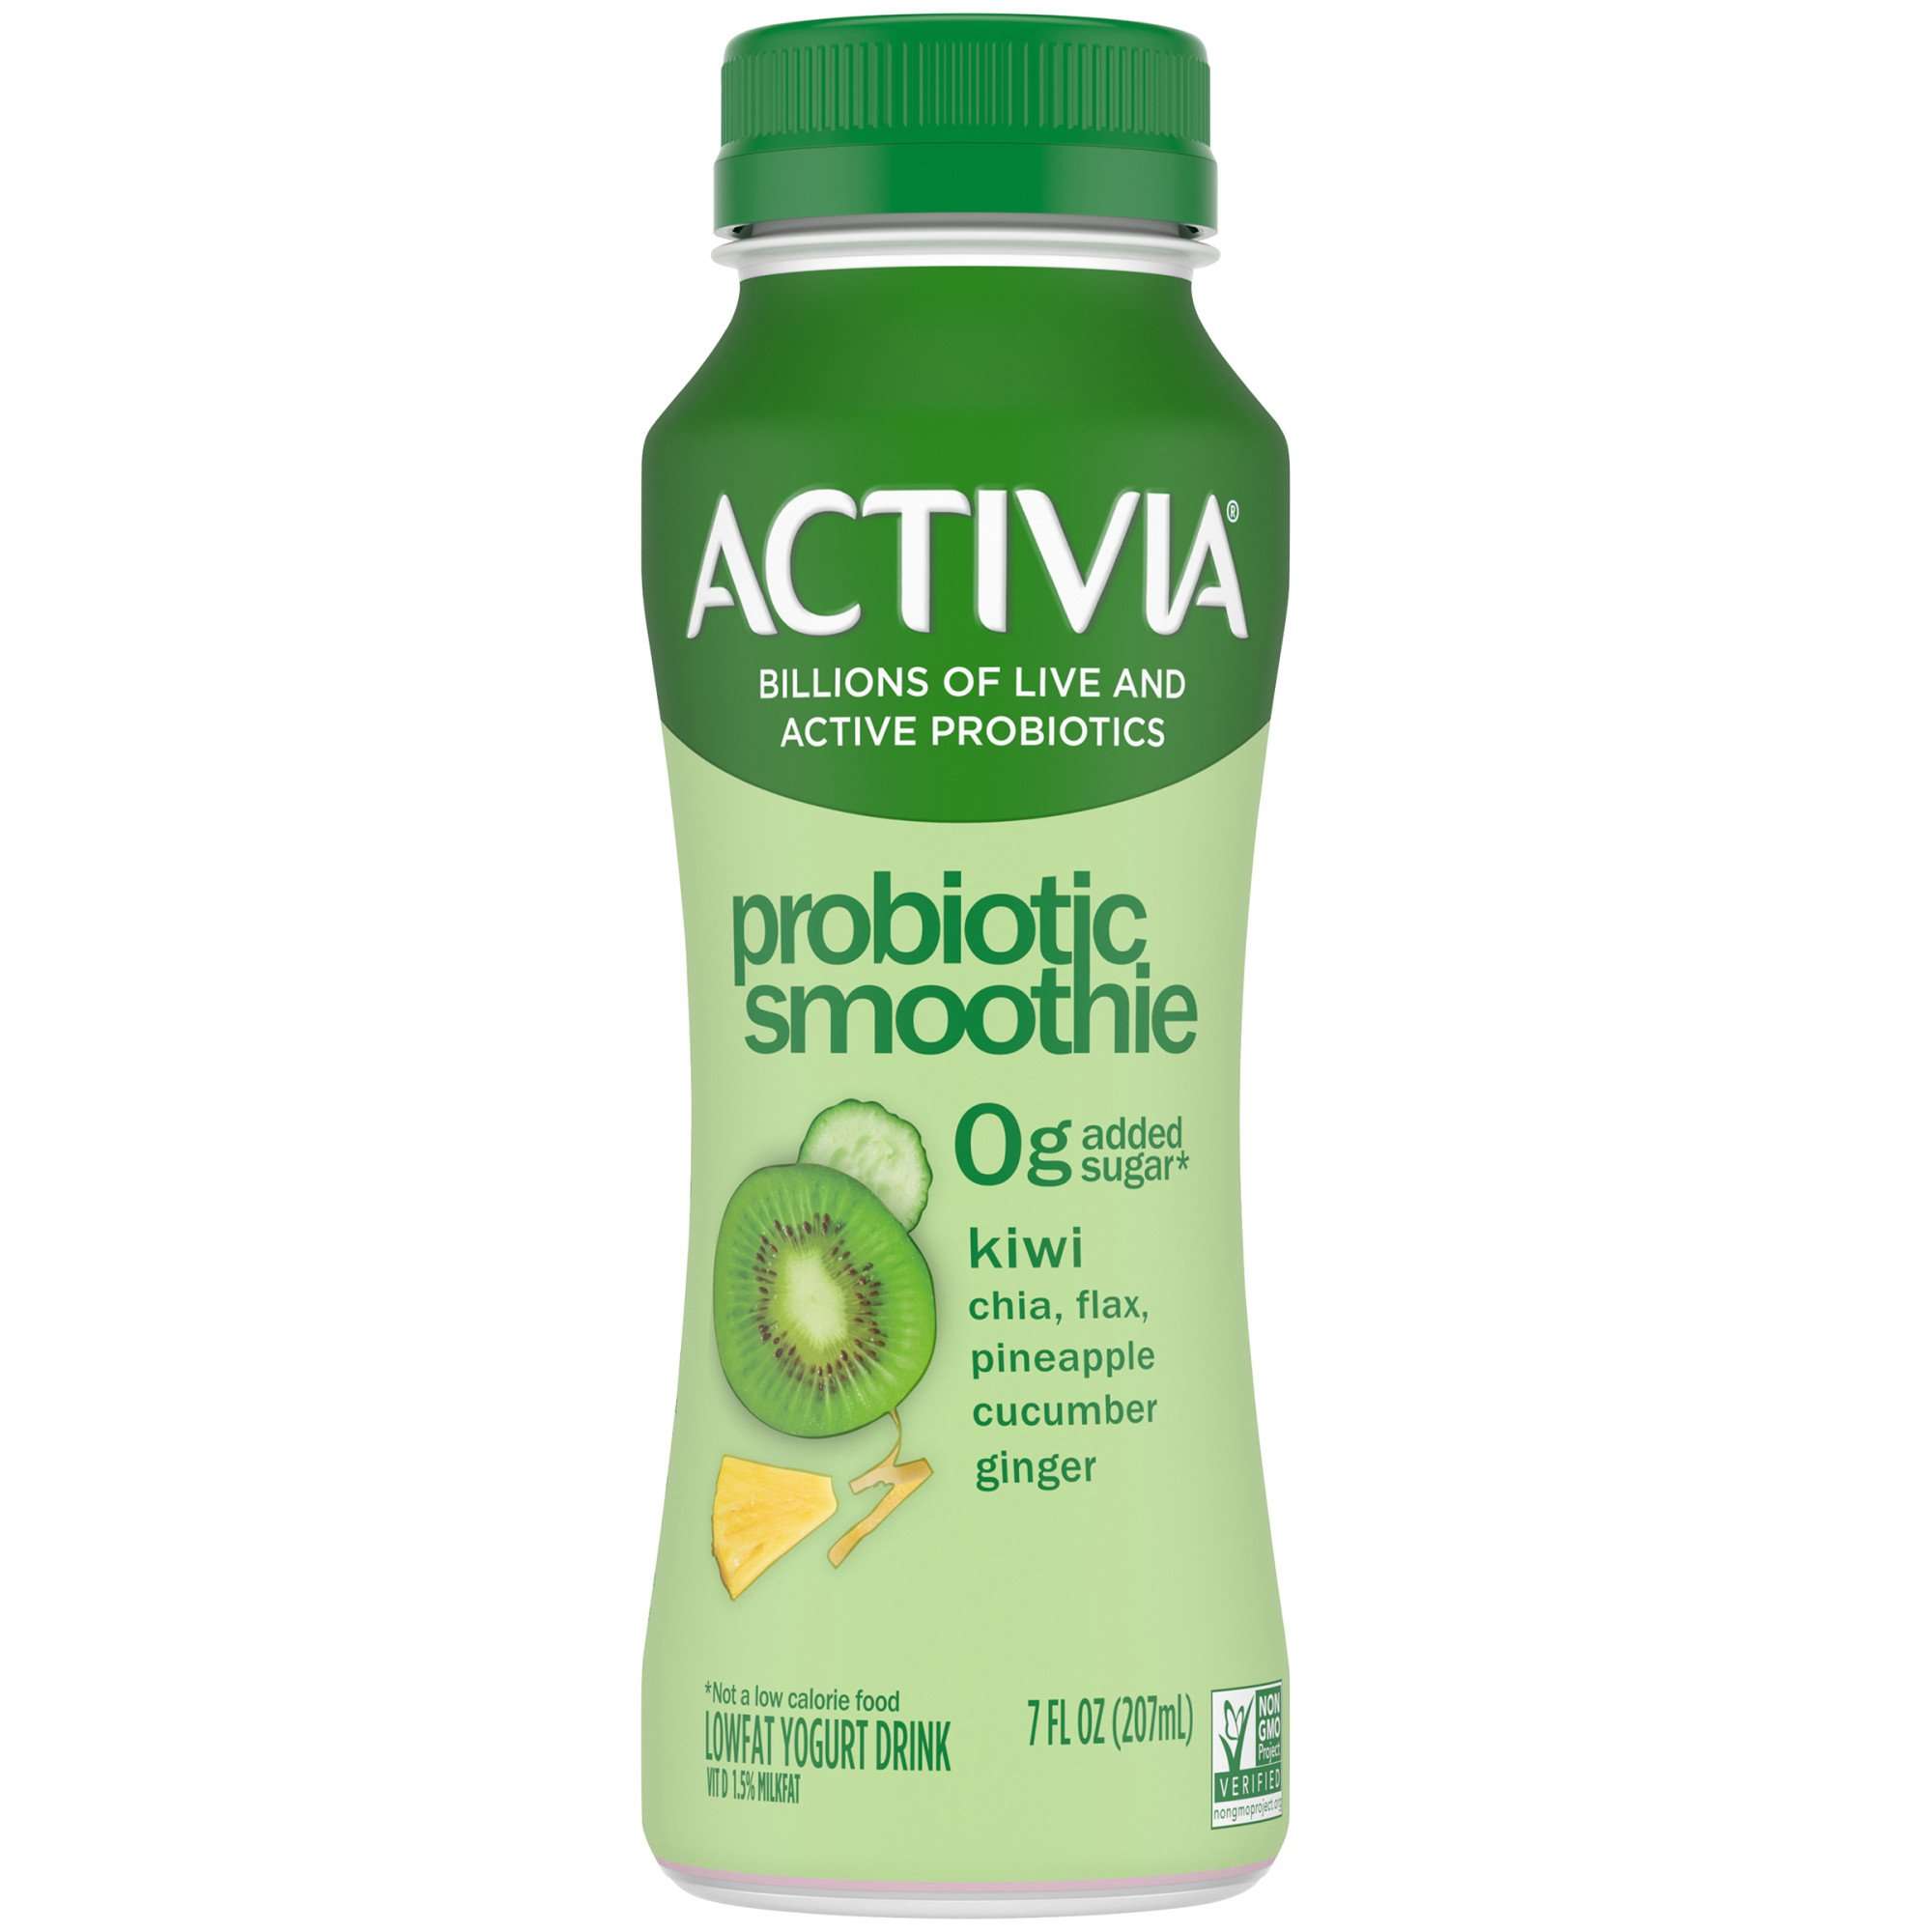 Activia Kiwi Pineapple Cucumber Probiotic Smoothie